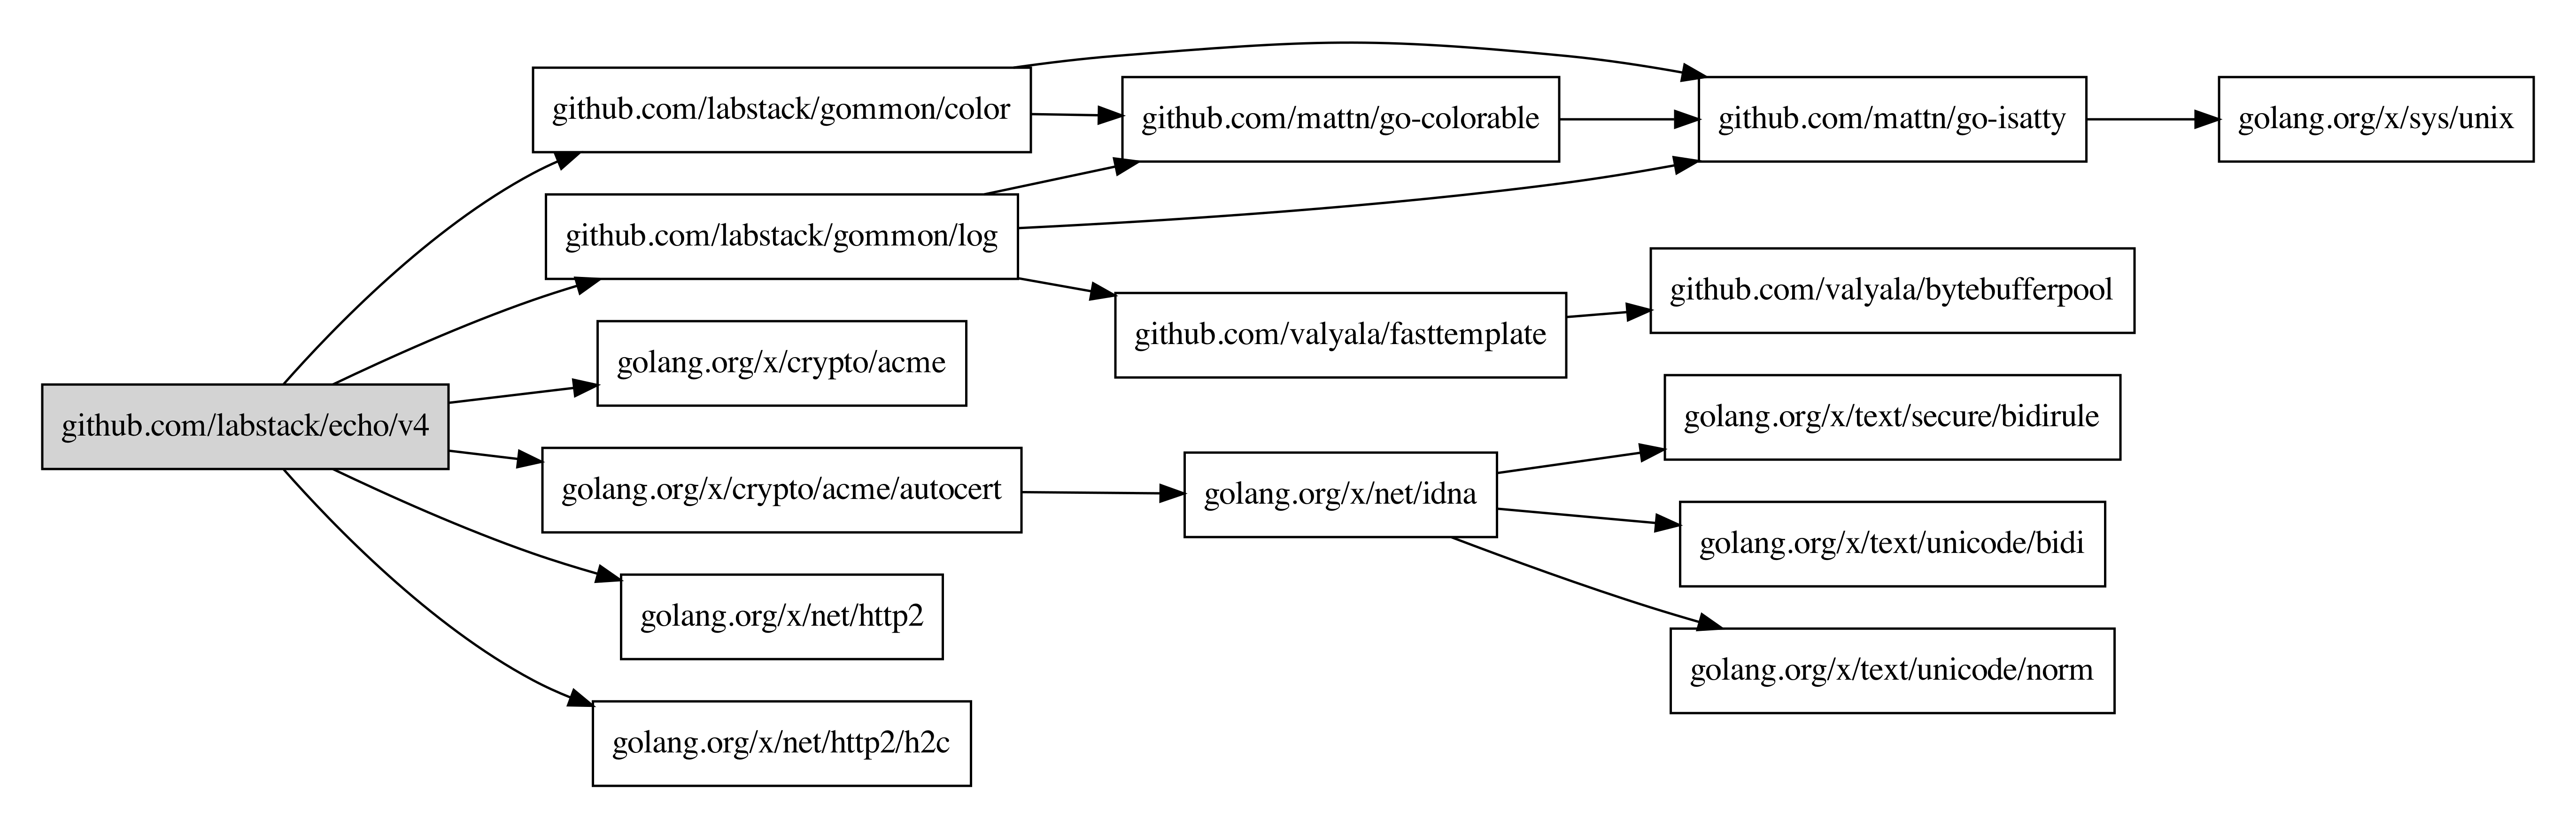 Example github.com/labstack/echo/v4